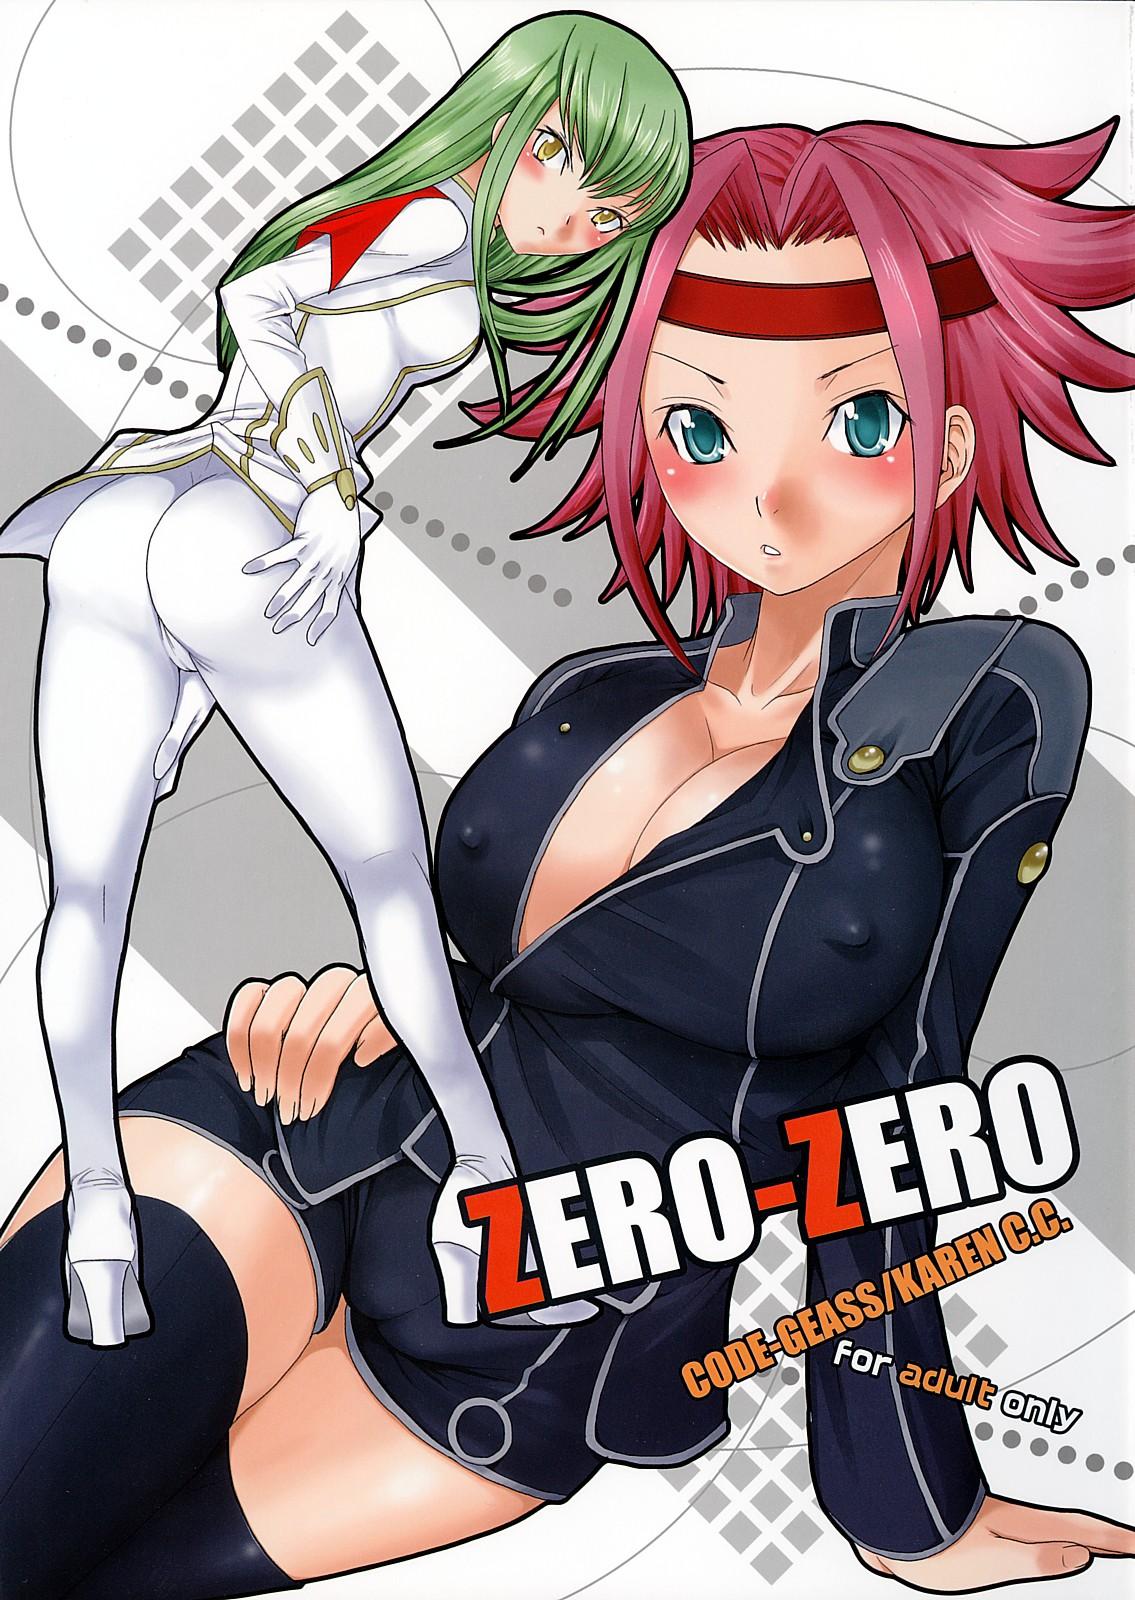 ZERO-ZERO 0